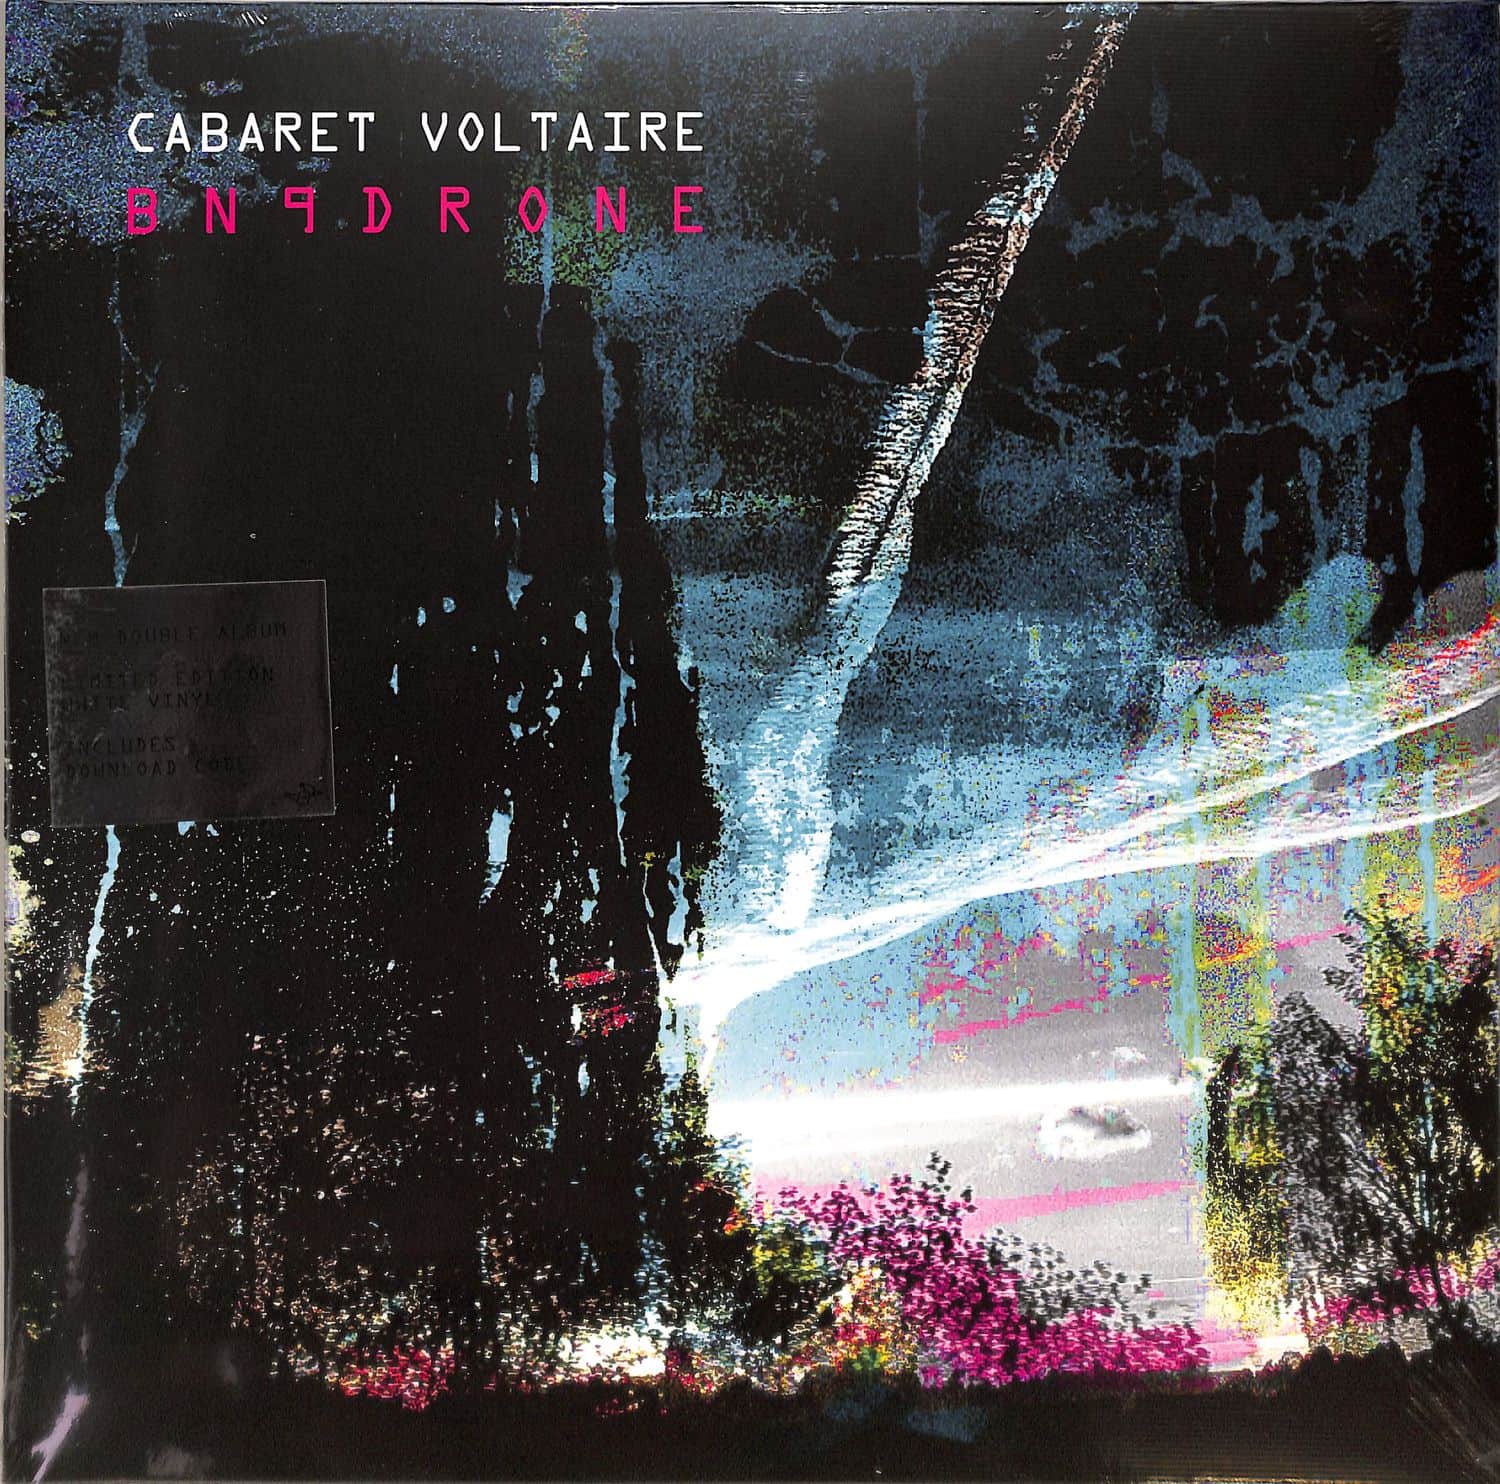 Cabaret Voltaire - BN9Drone 